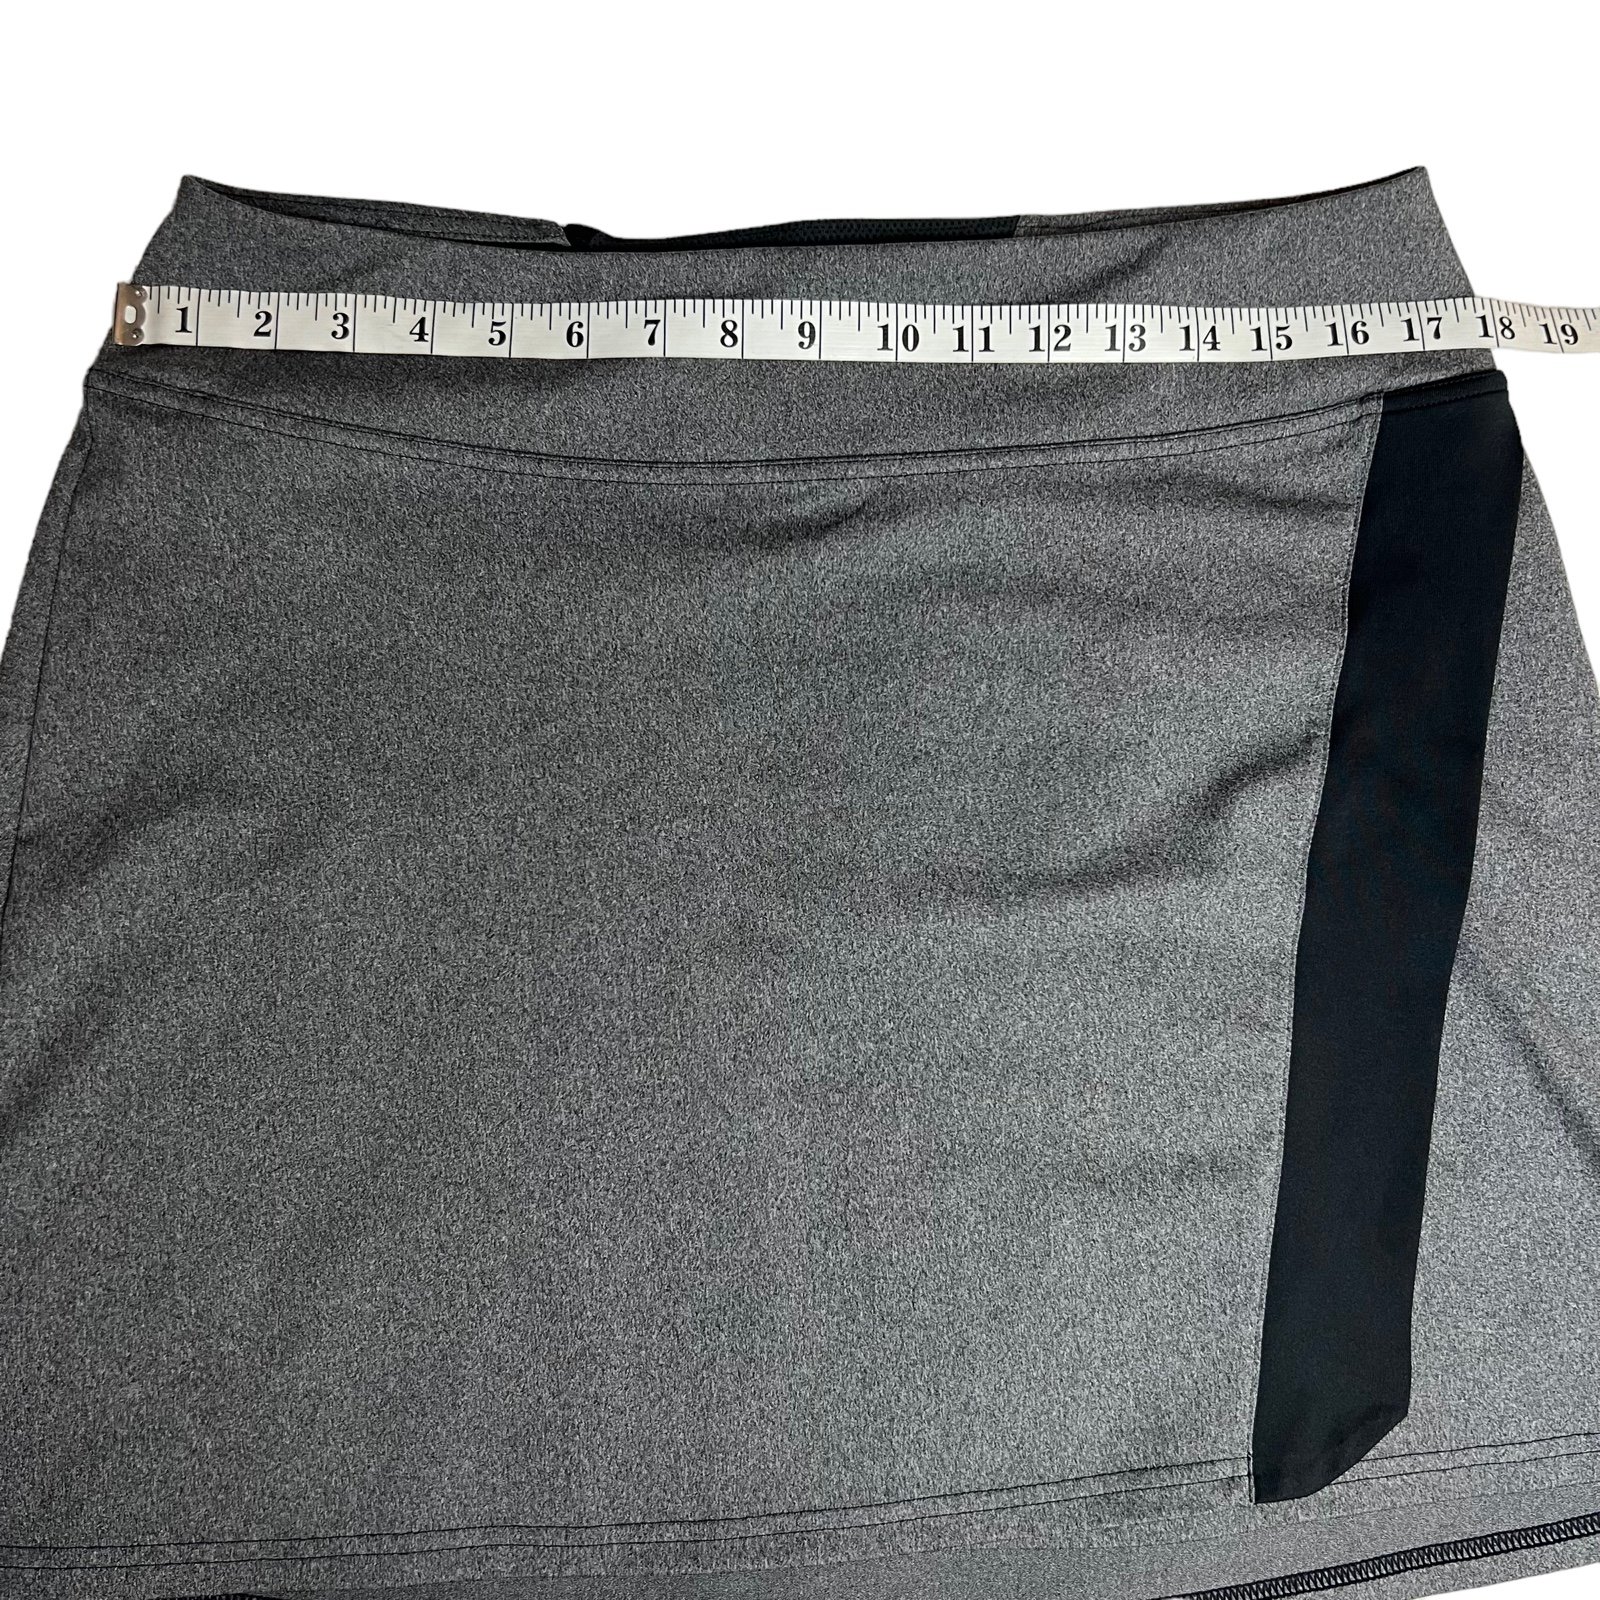 Popular Pearl Izumi Bike cycling Skirt Size:  XLarge Grey Black Stretch Wrap (No Liner) O0tVz4vY8 well sale